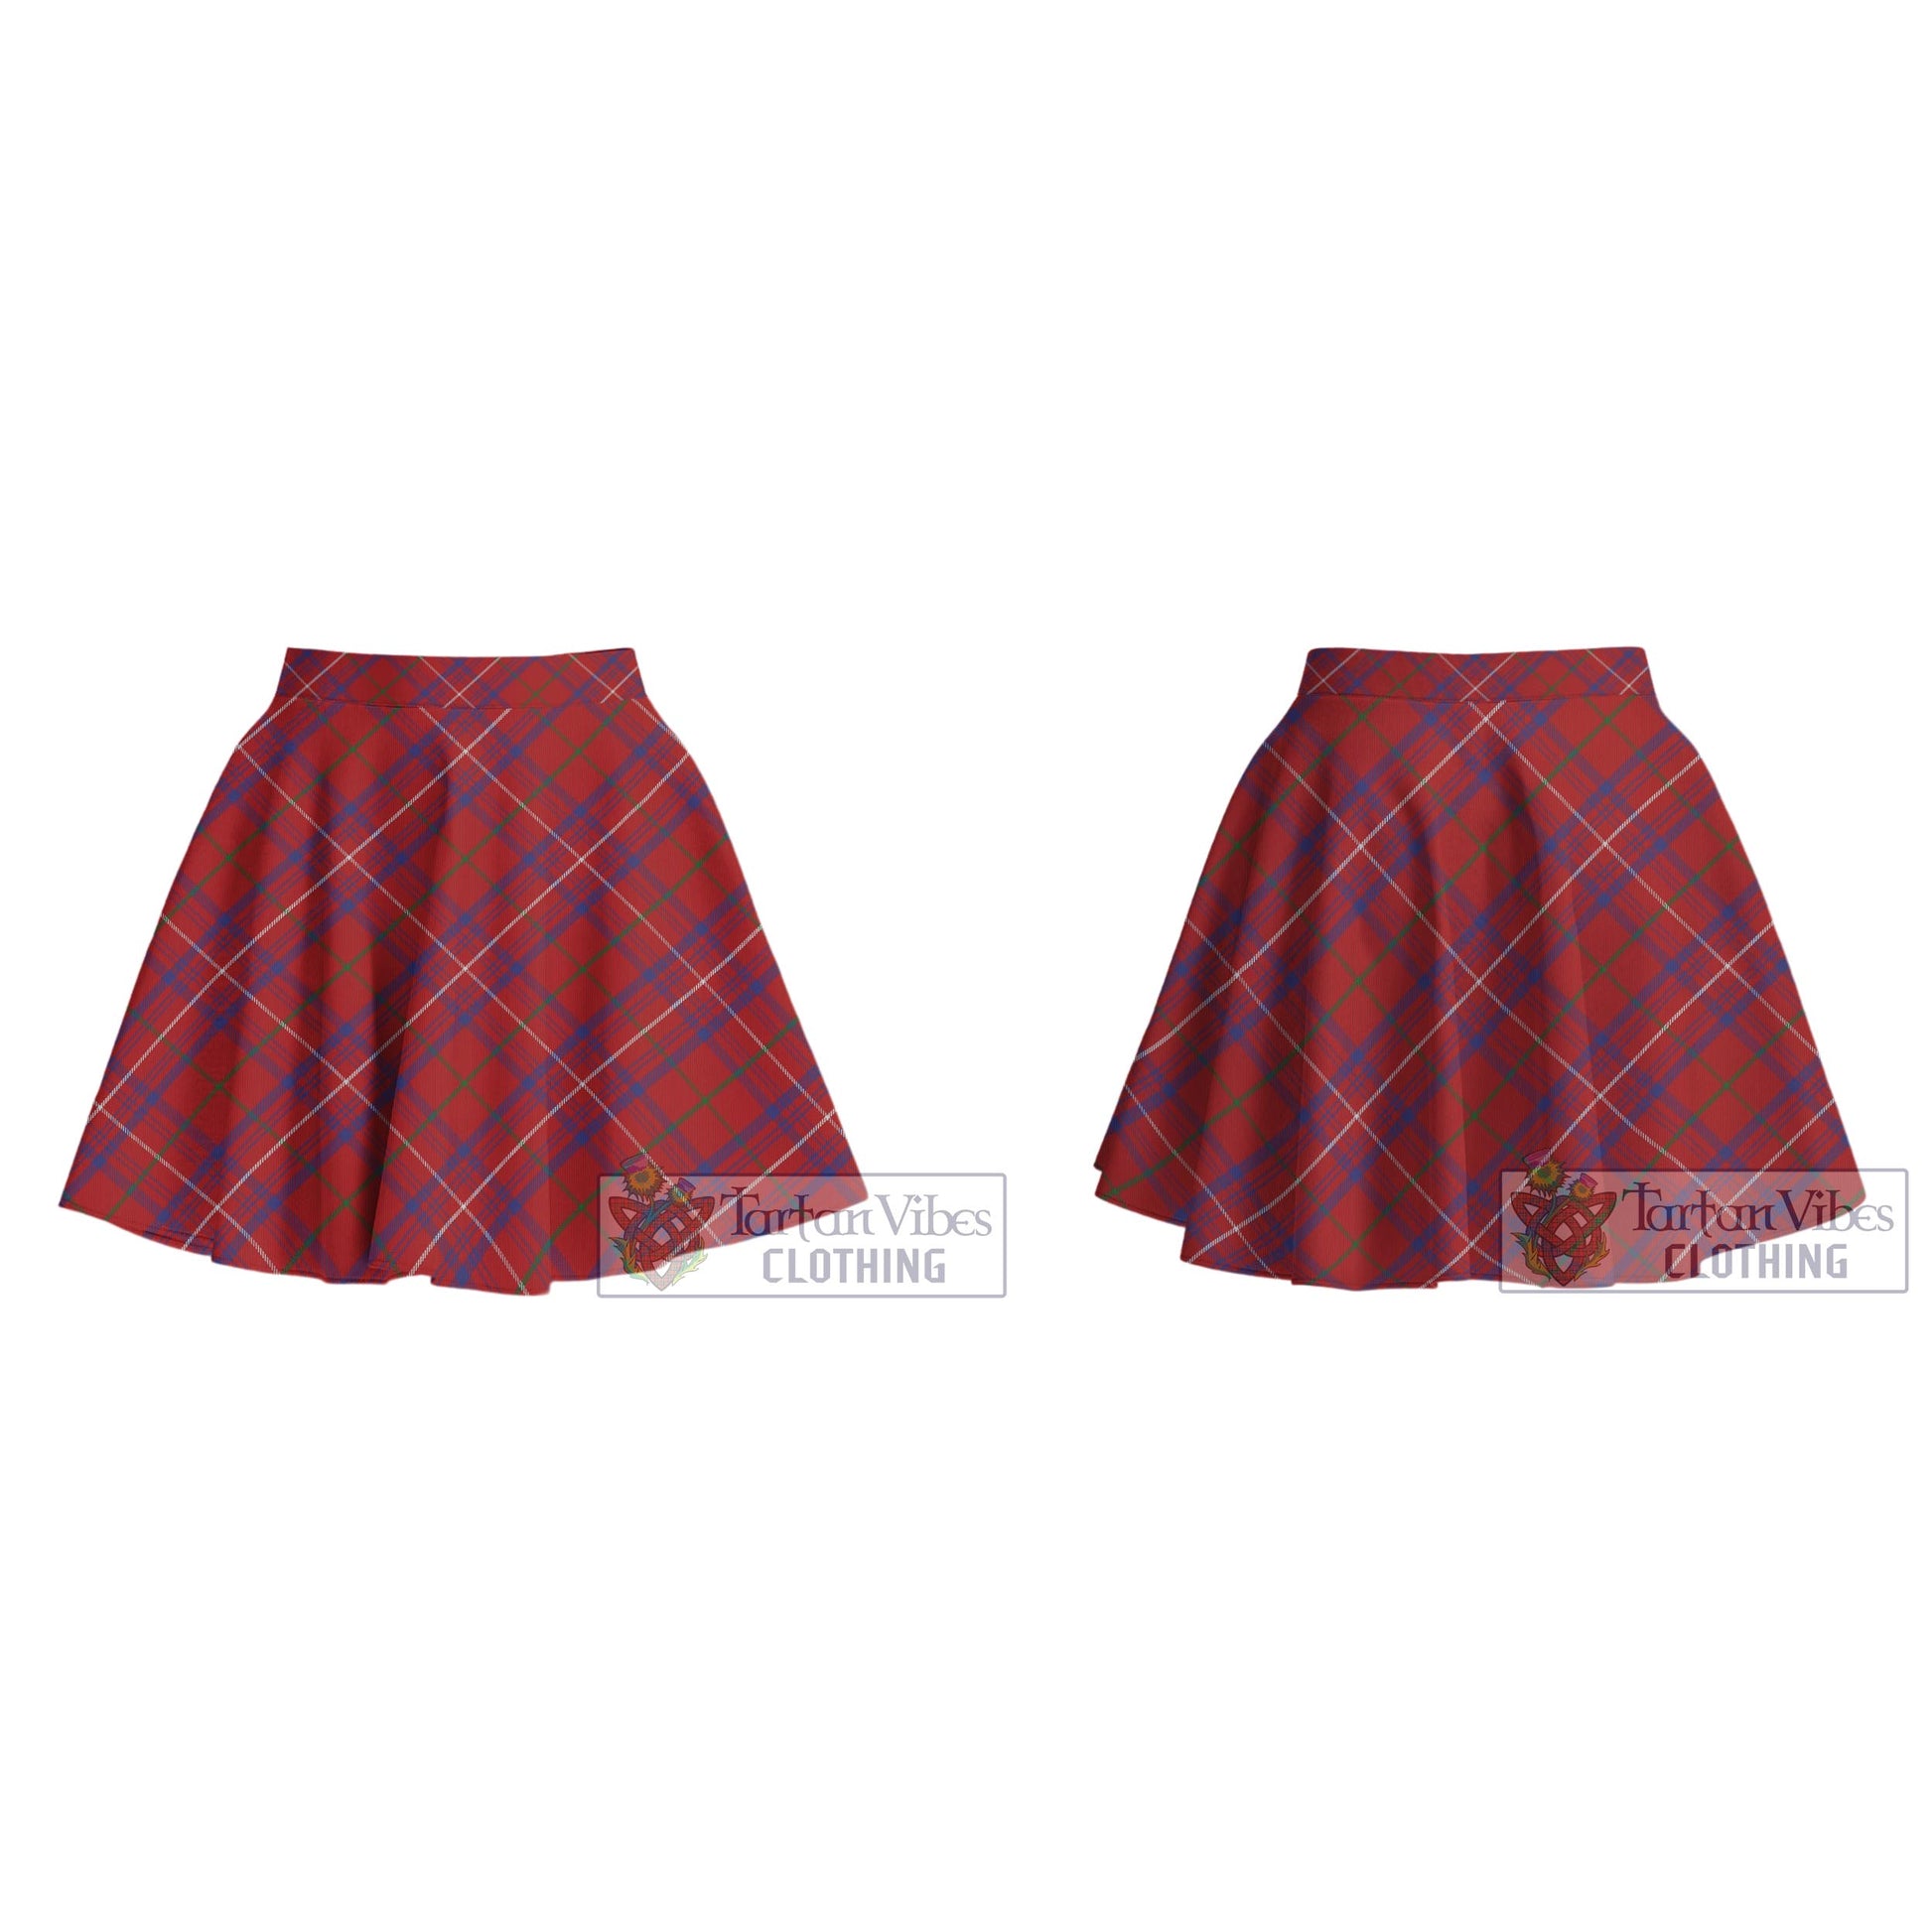 Tartan Vibes Clothing Rose Tartan Women's Plated Mini Skirt